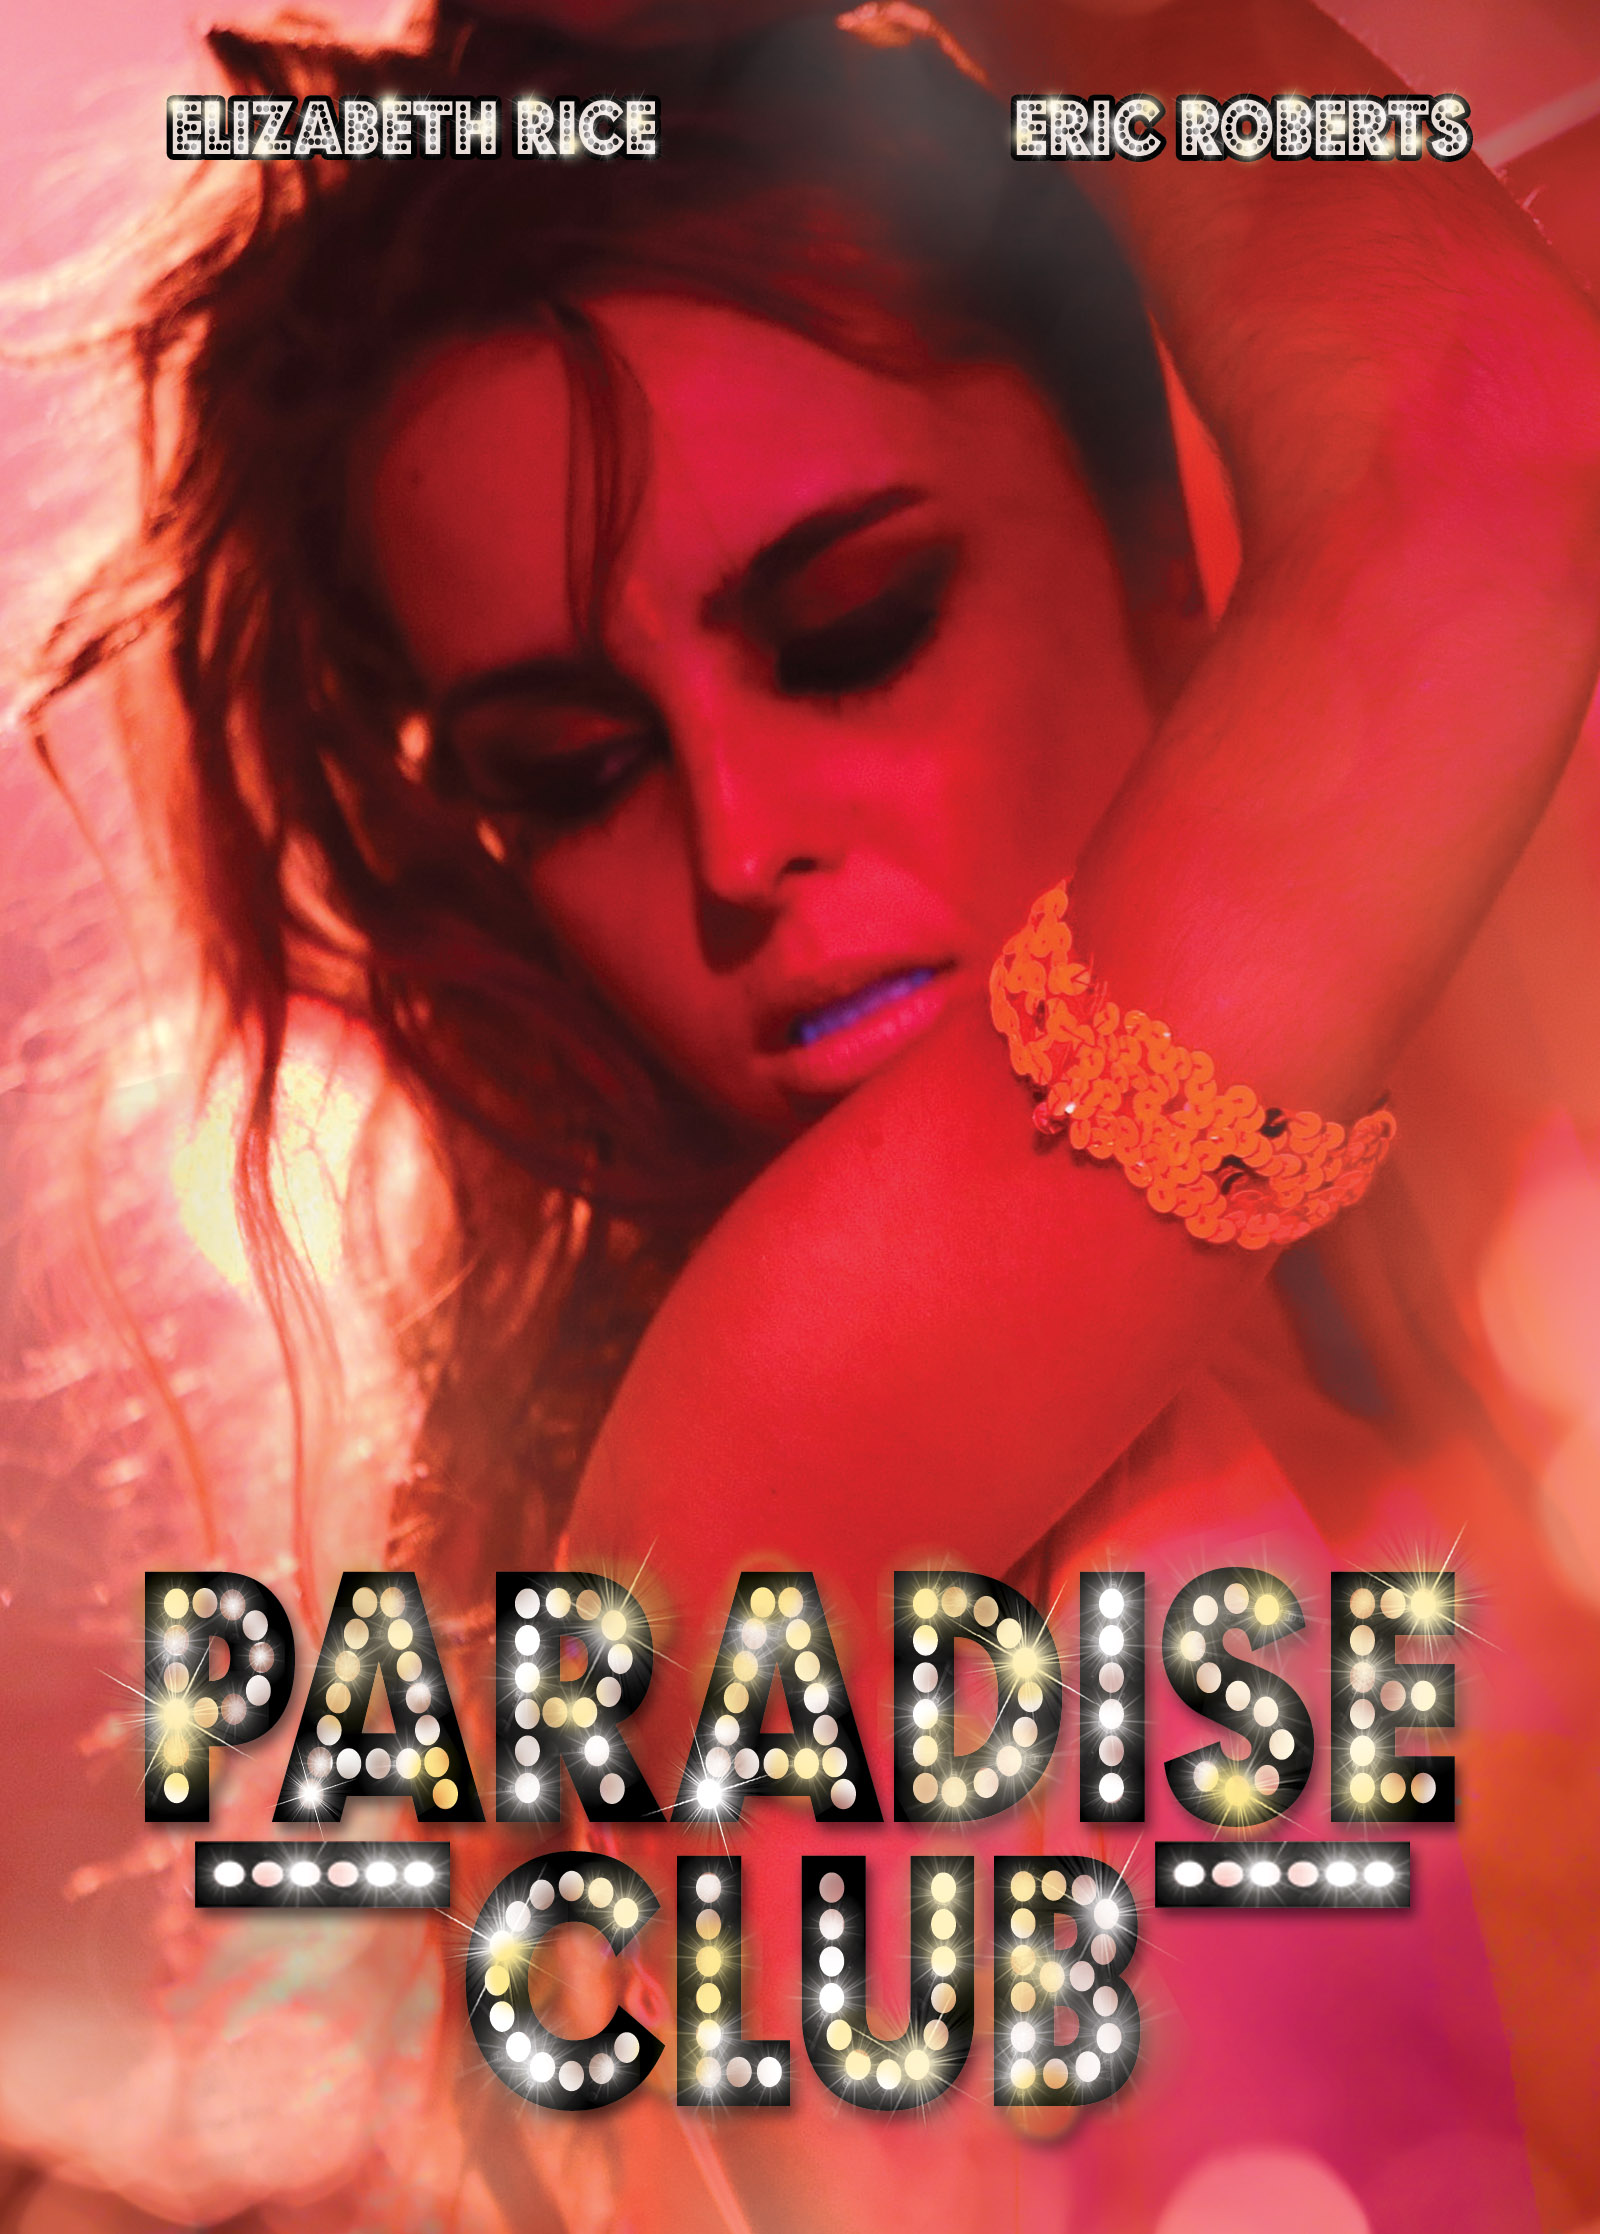 The Paradise Club